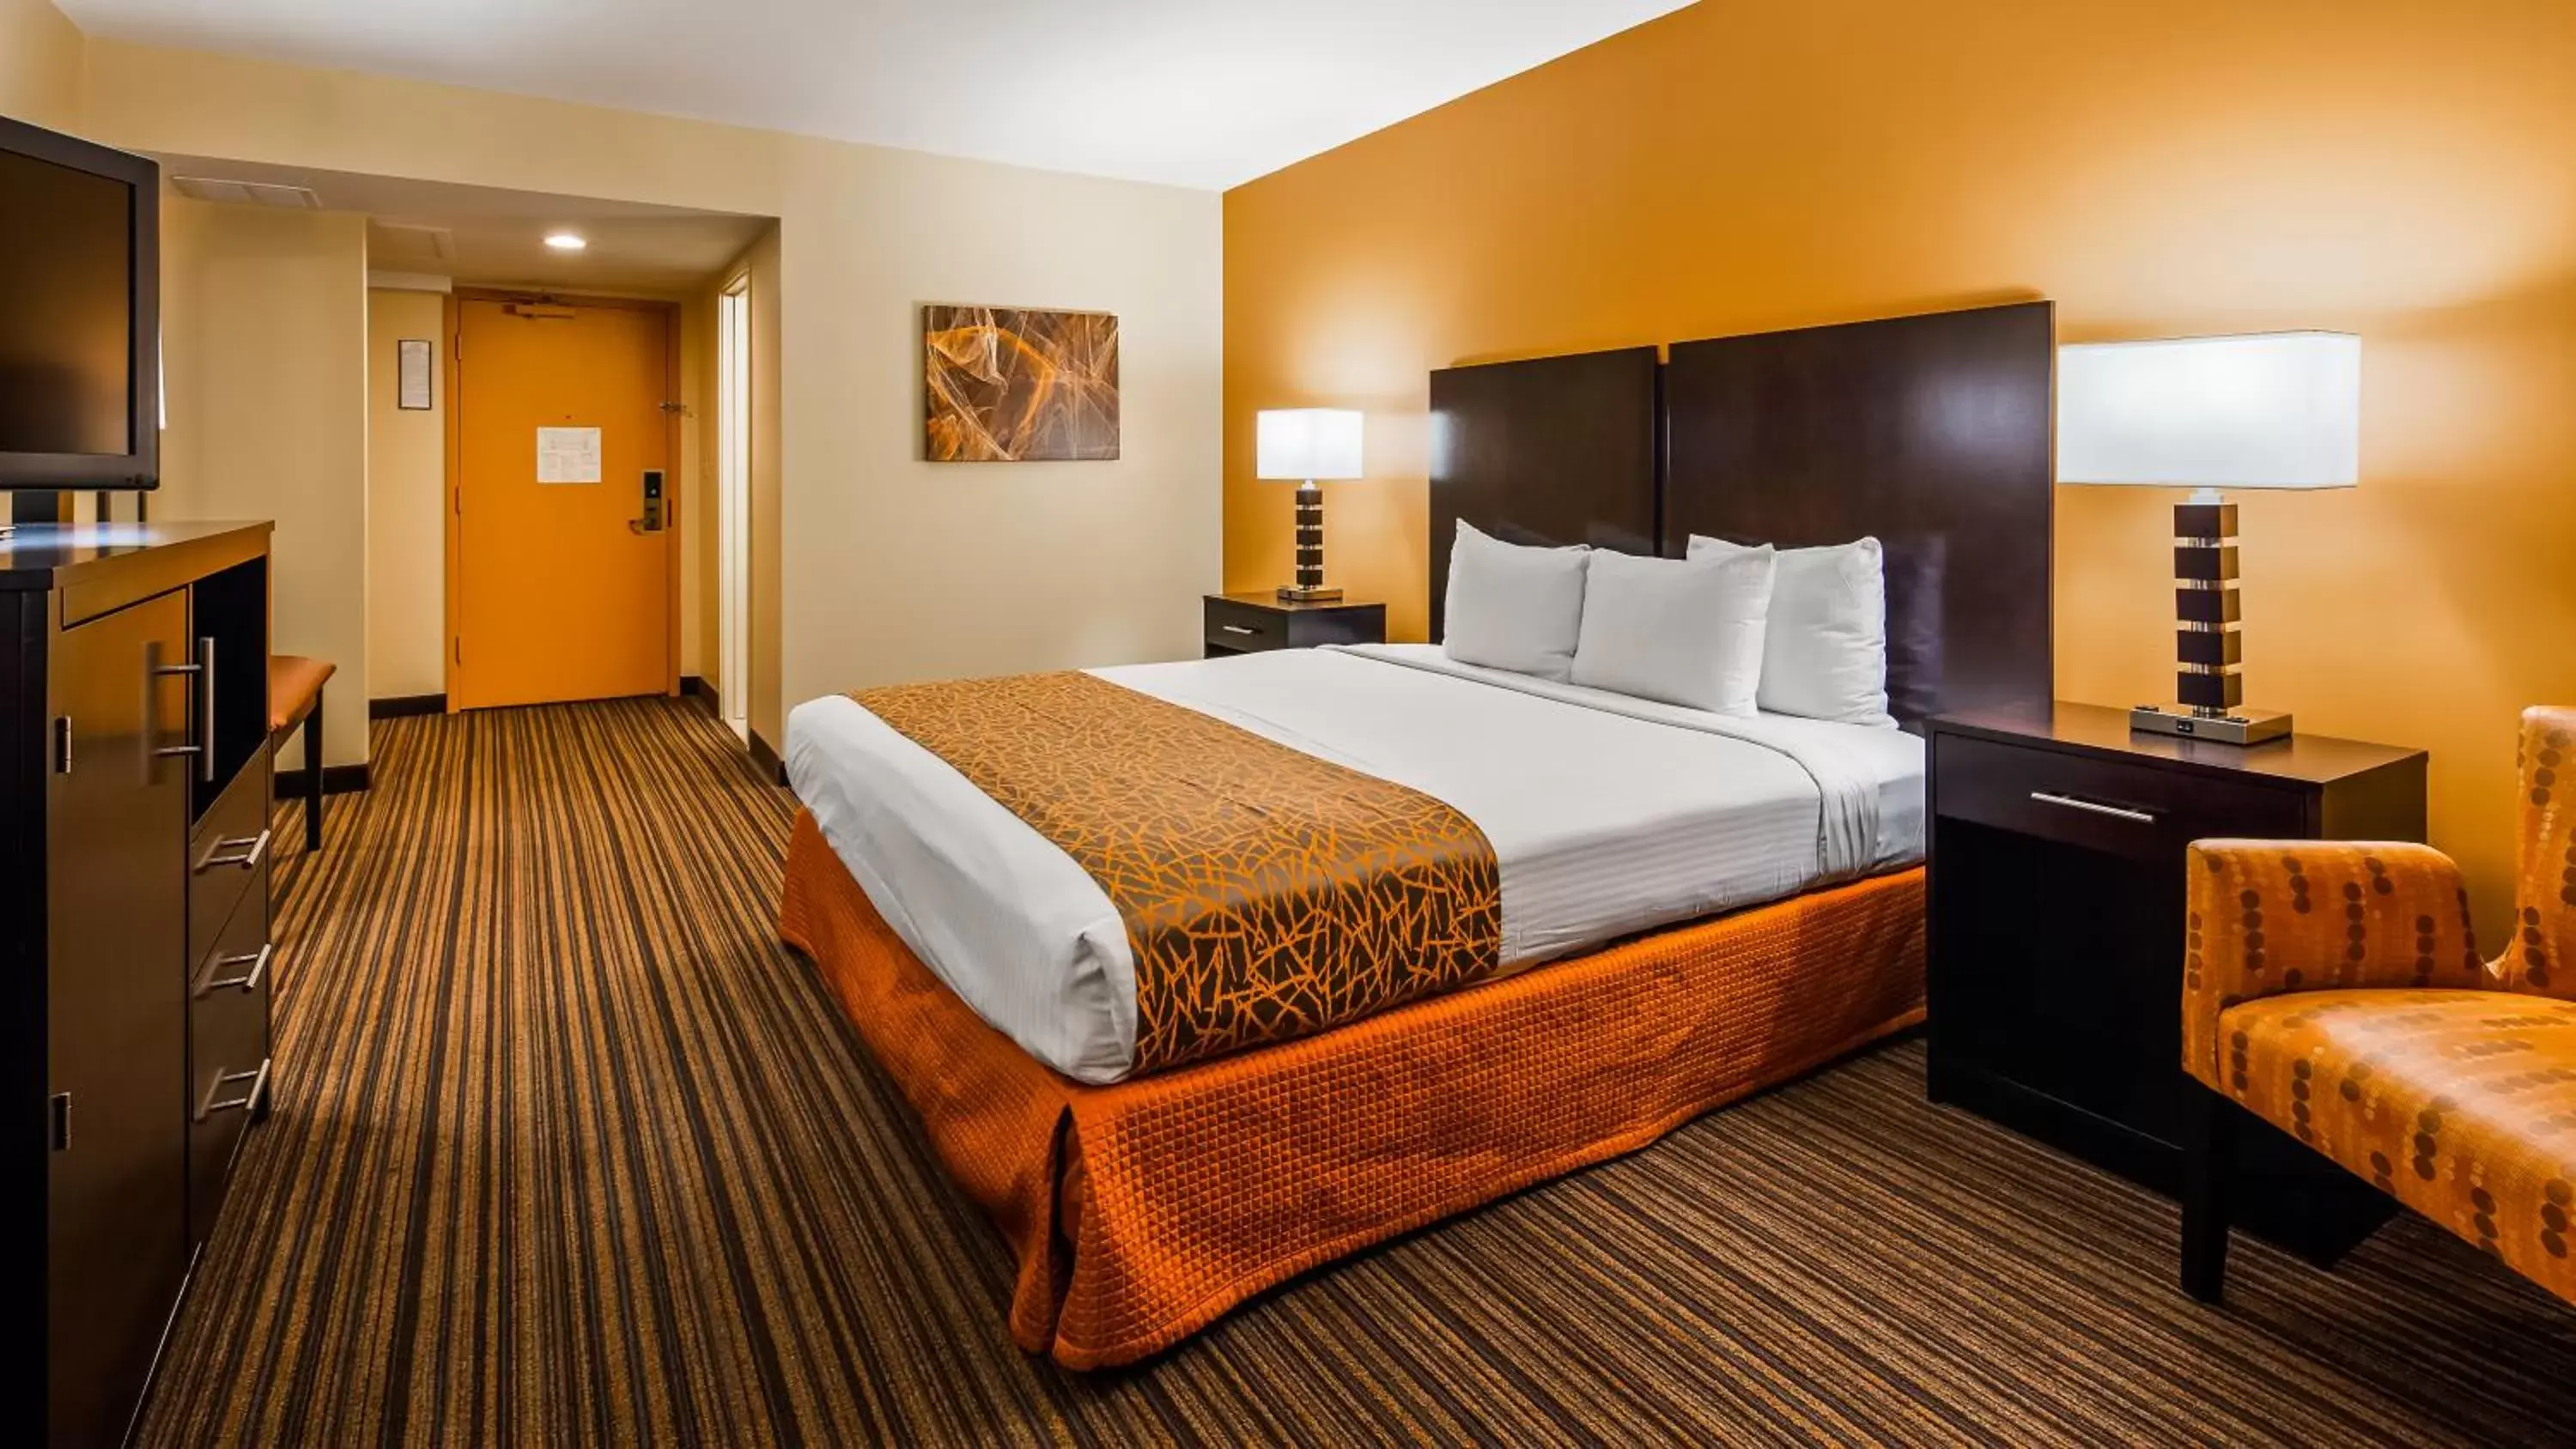 Bedroom, Bed in Best Western The Plaza Hotel - Free Breakfast